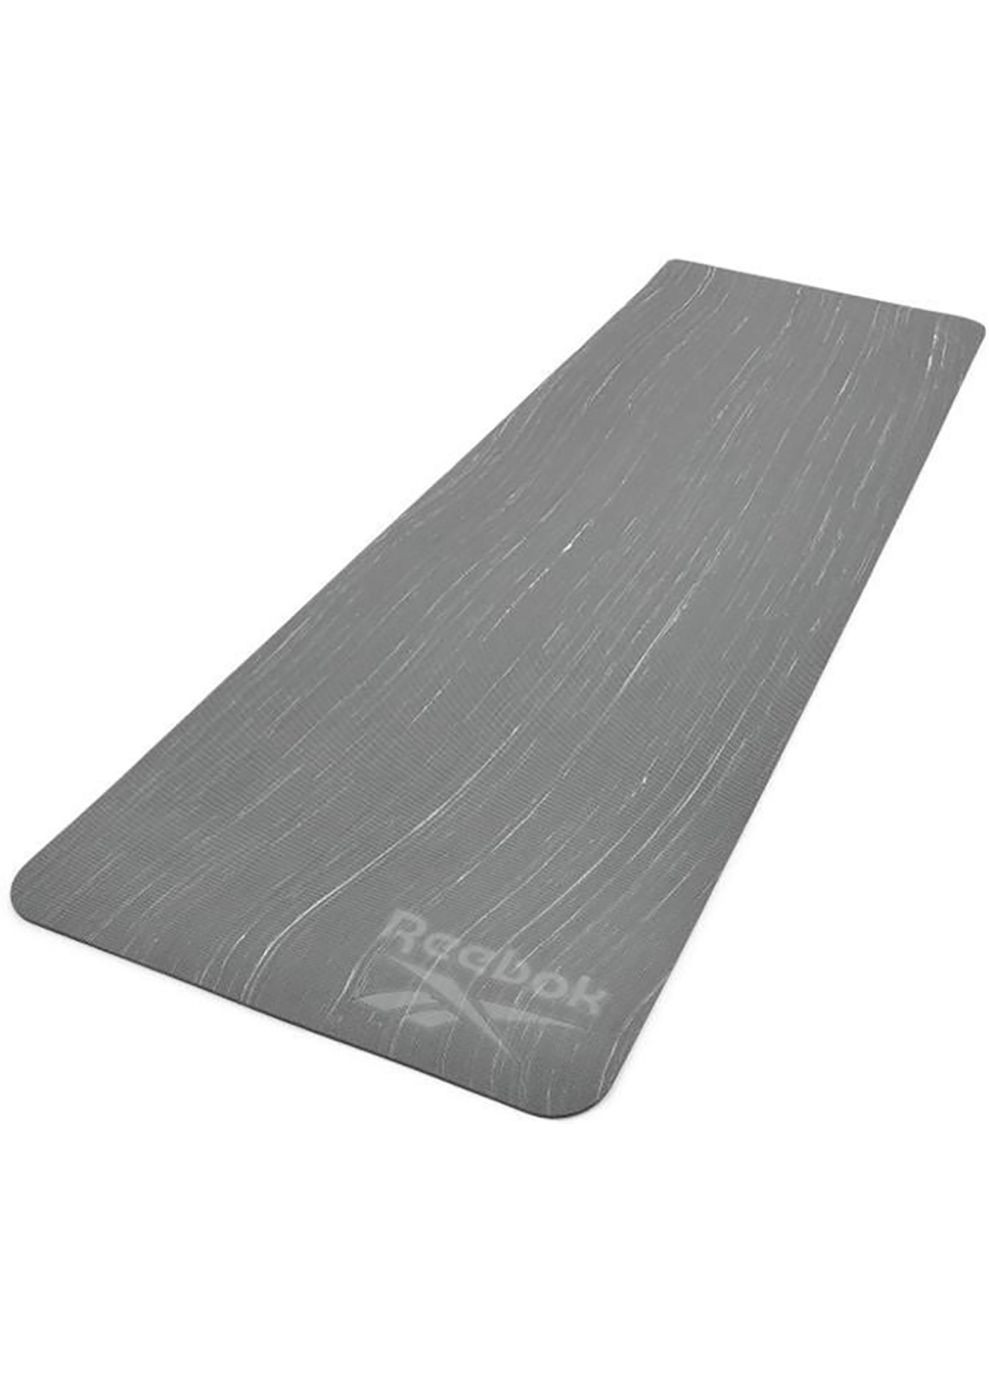 Двухстороний коврик для йоги Camo Yoga Mat серый Reebok (268743493)